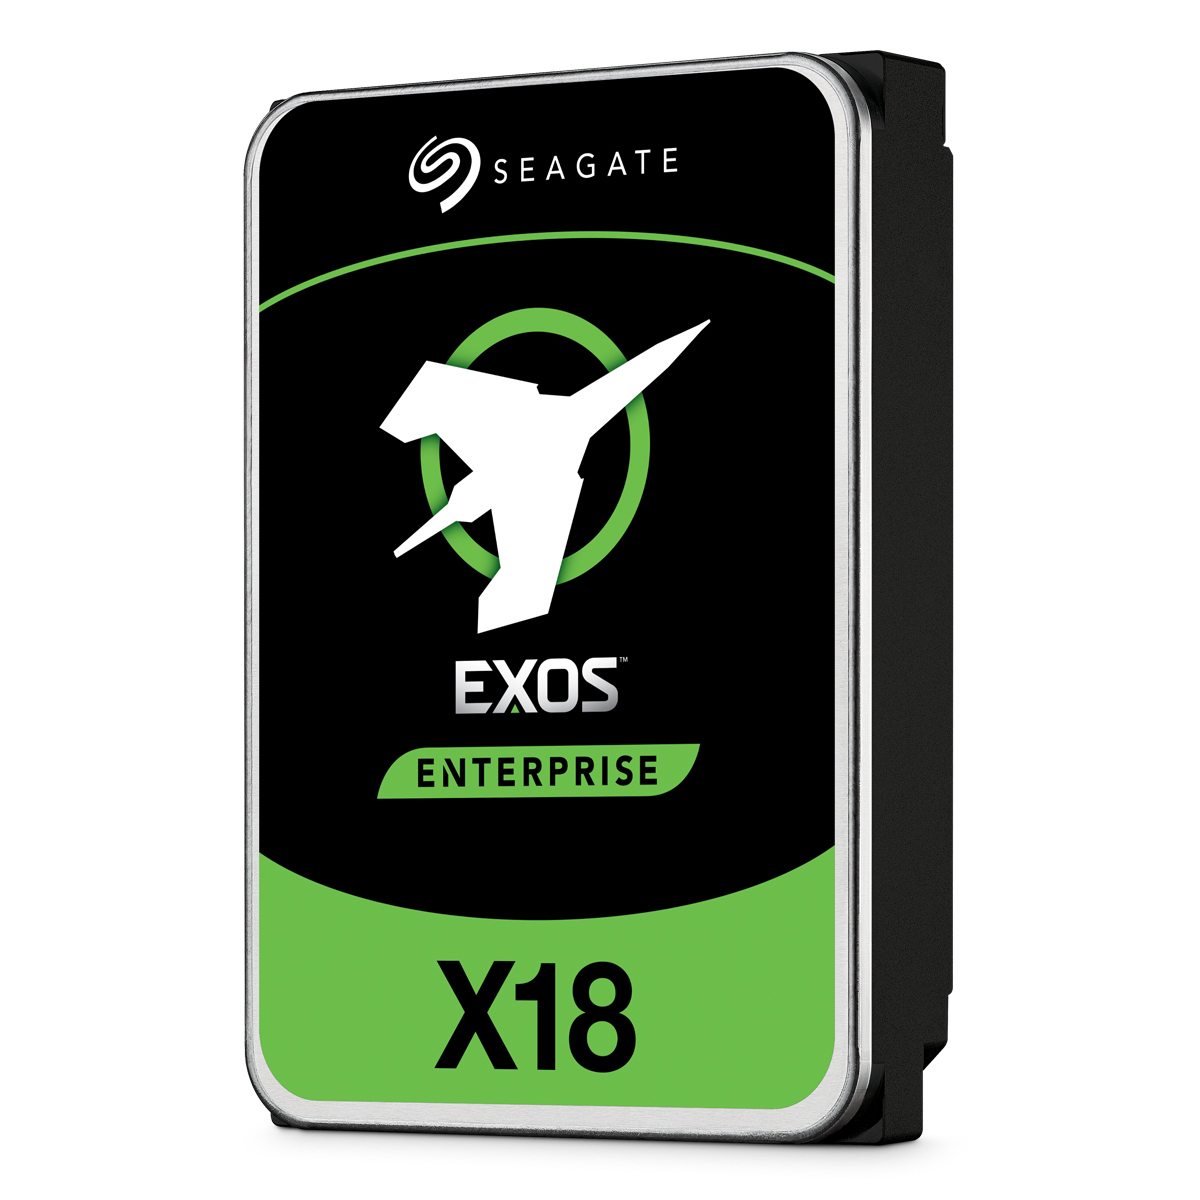 Seagate Exos X18 16TB 3.5 Zoll SATA 6Gb/s CMR OEM-Ware Interne Enterprise Festplatte mit FastFormat (512e/4Kn) von Seagate